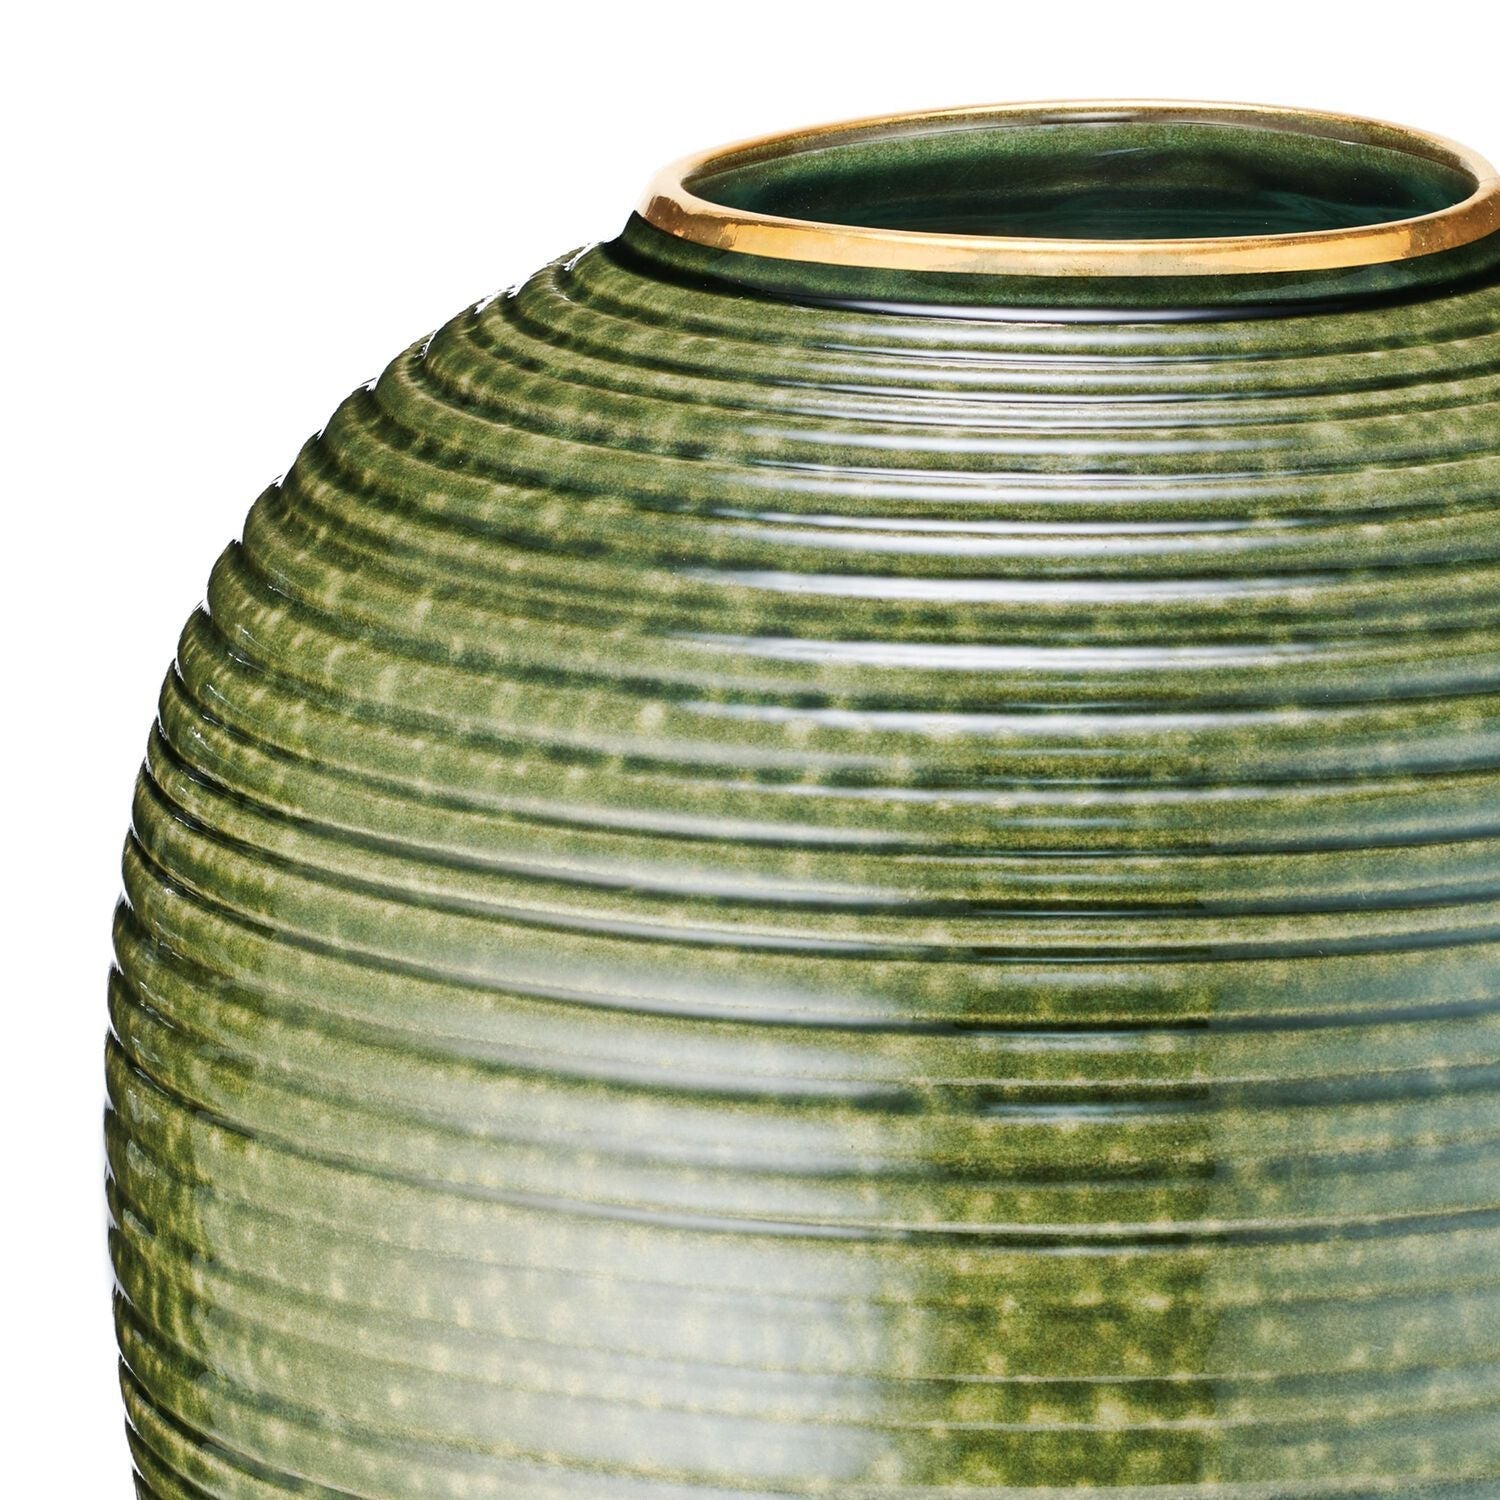 Calinda Tapered Vase